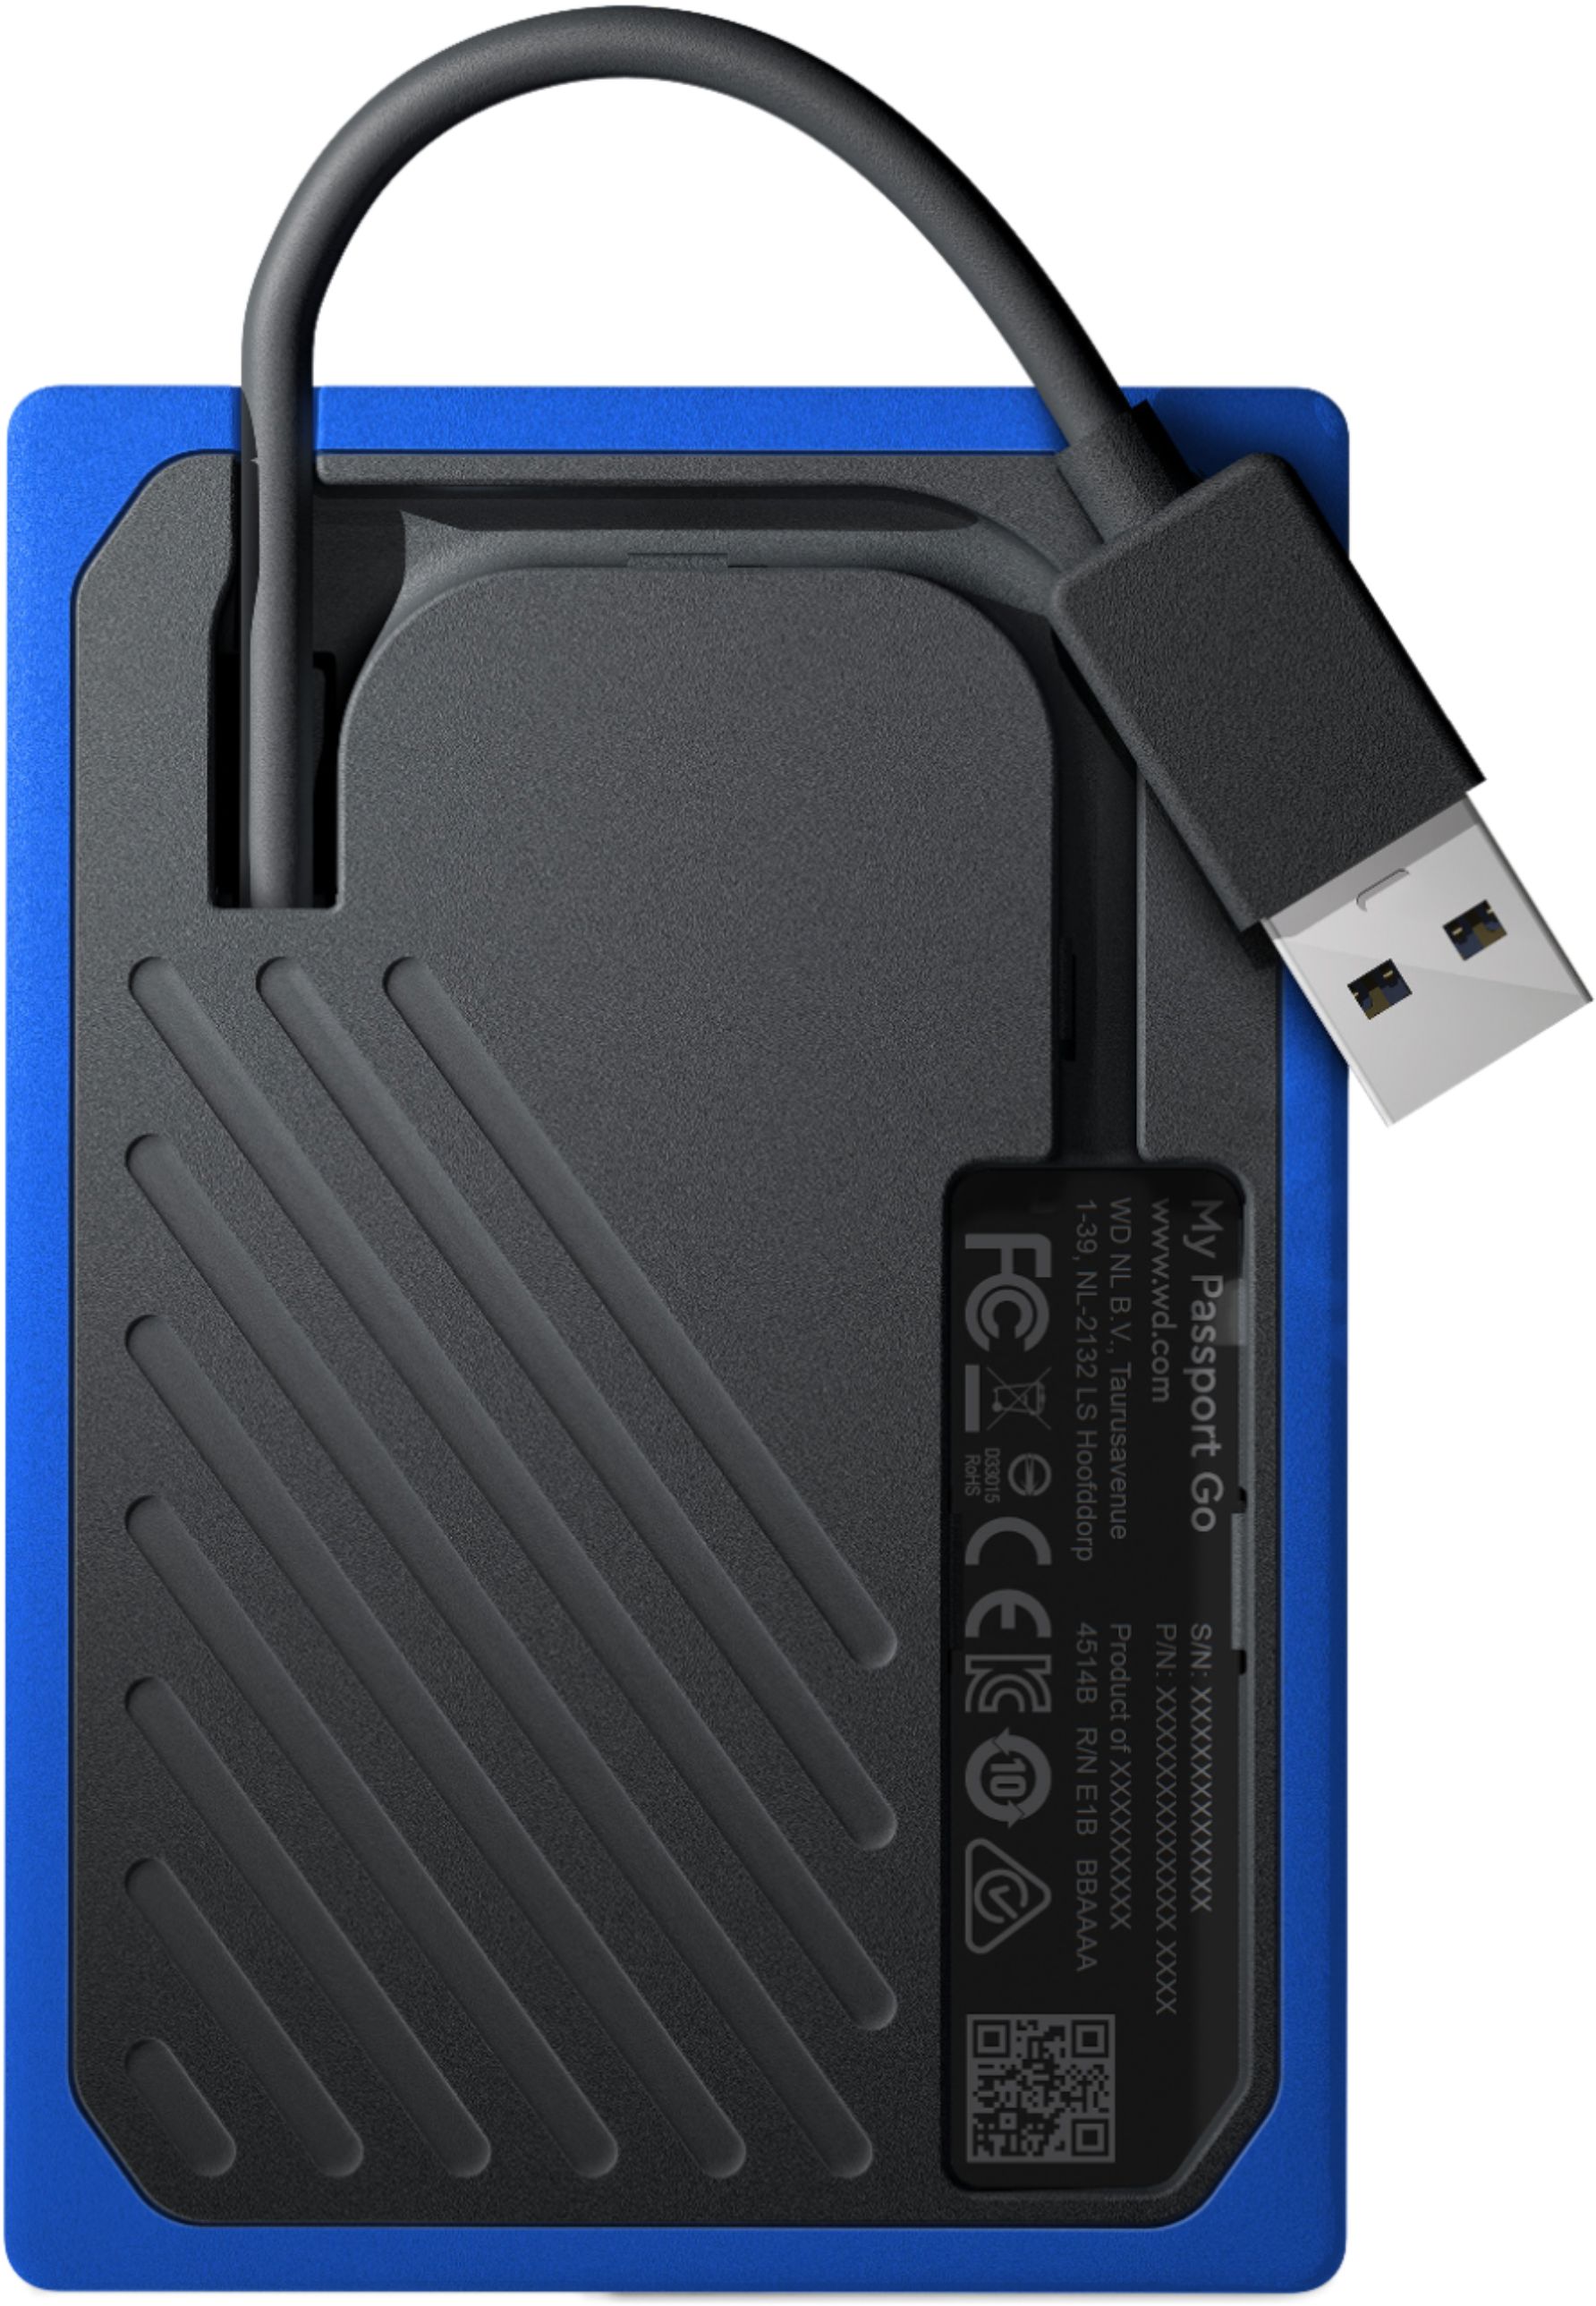 Wd 1tb My Passport Go Portable Ssd 64gb Easystore Usb Flash Drive Bundle Black With Cobalt Trim Wdbmcg0010bbt Webb Best Buy